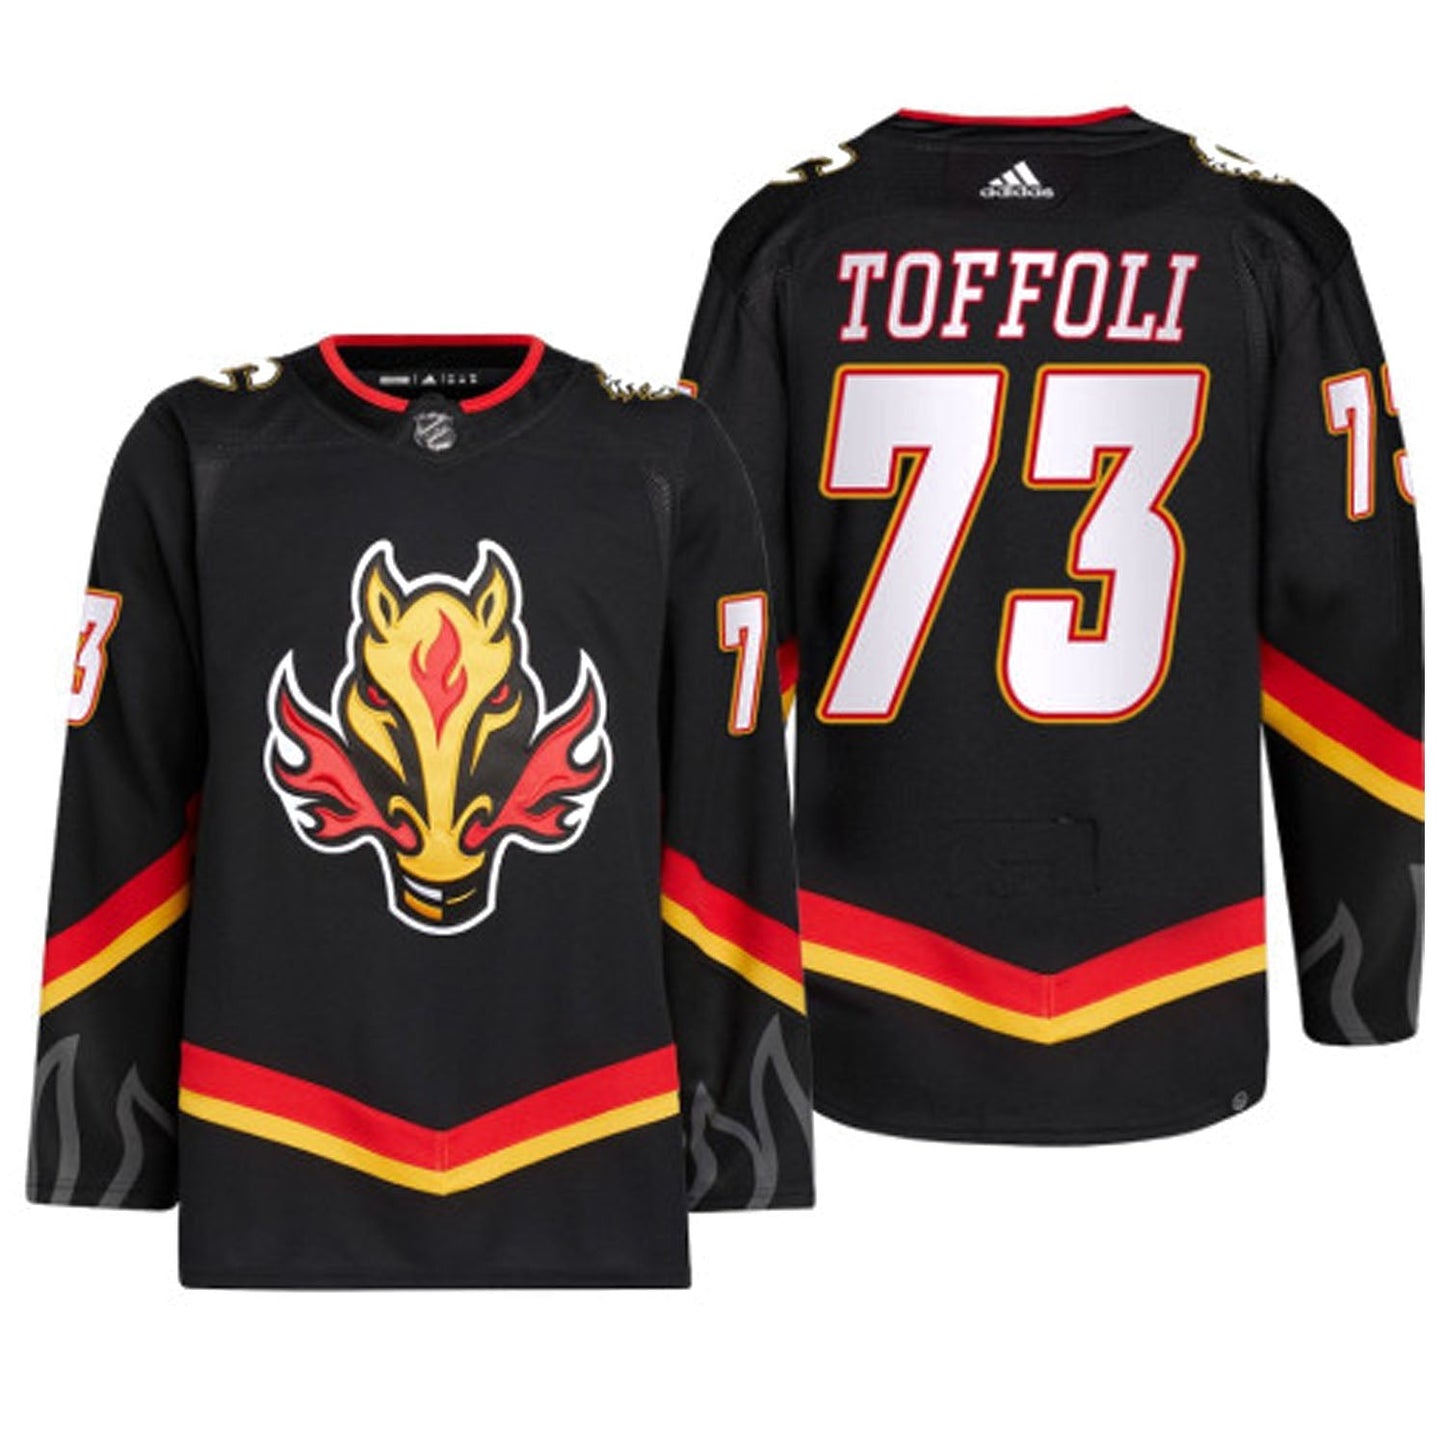 NHL Tyler Toffoli Calgary Flames 73 Jersey